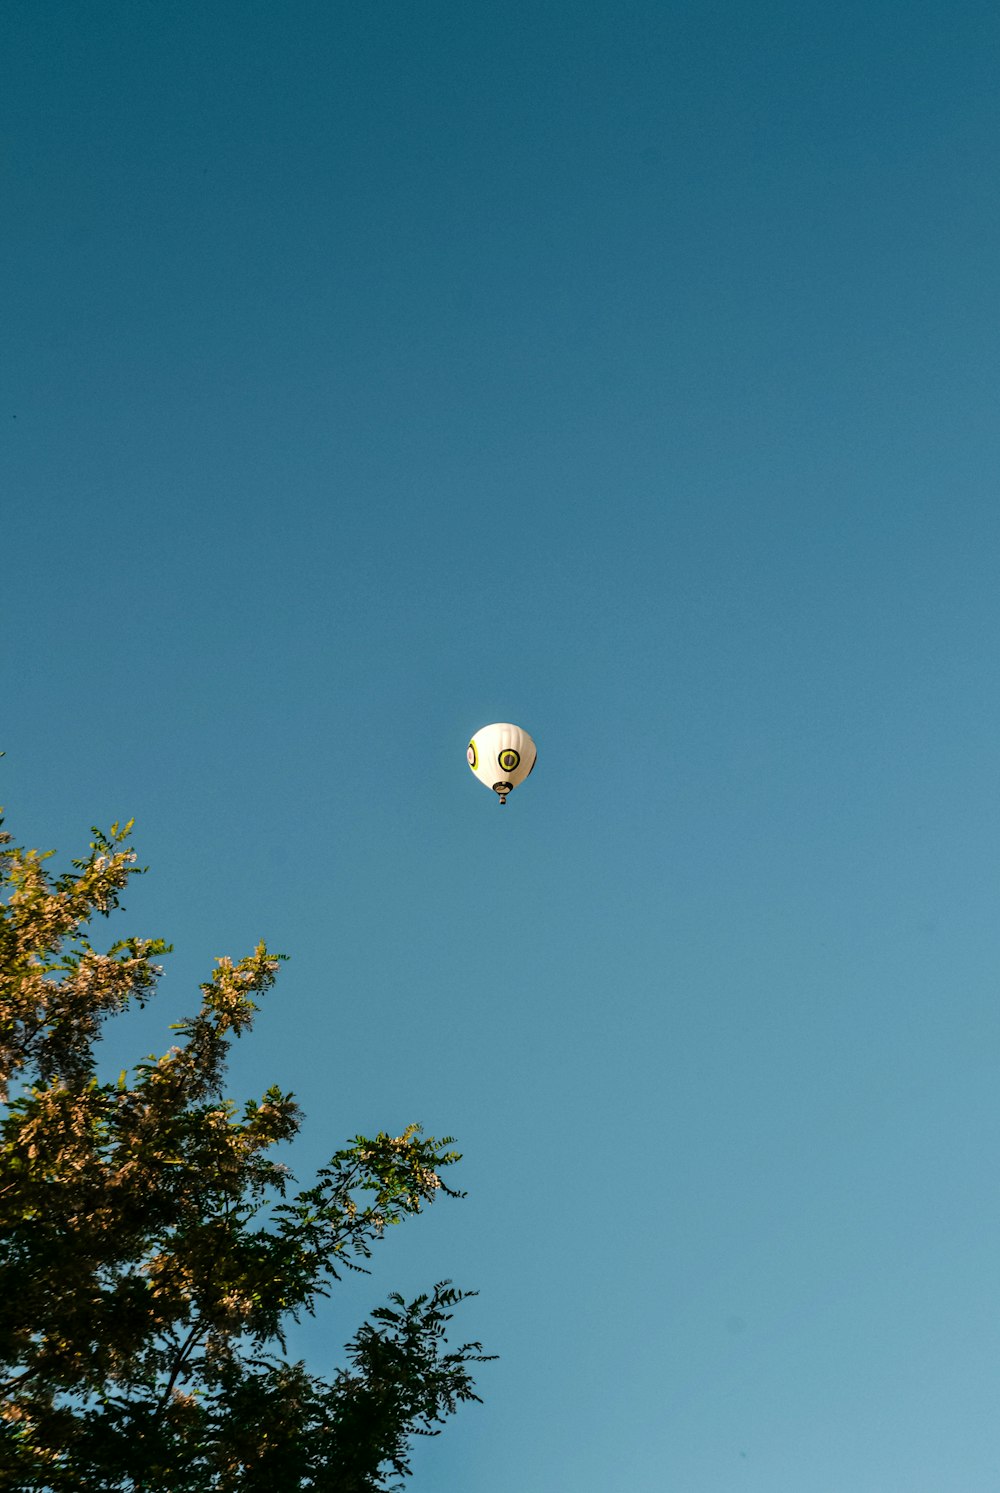 a hot air balloon flying through a blue sky